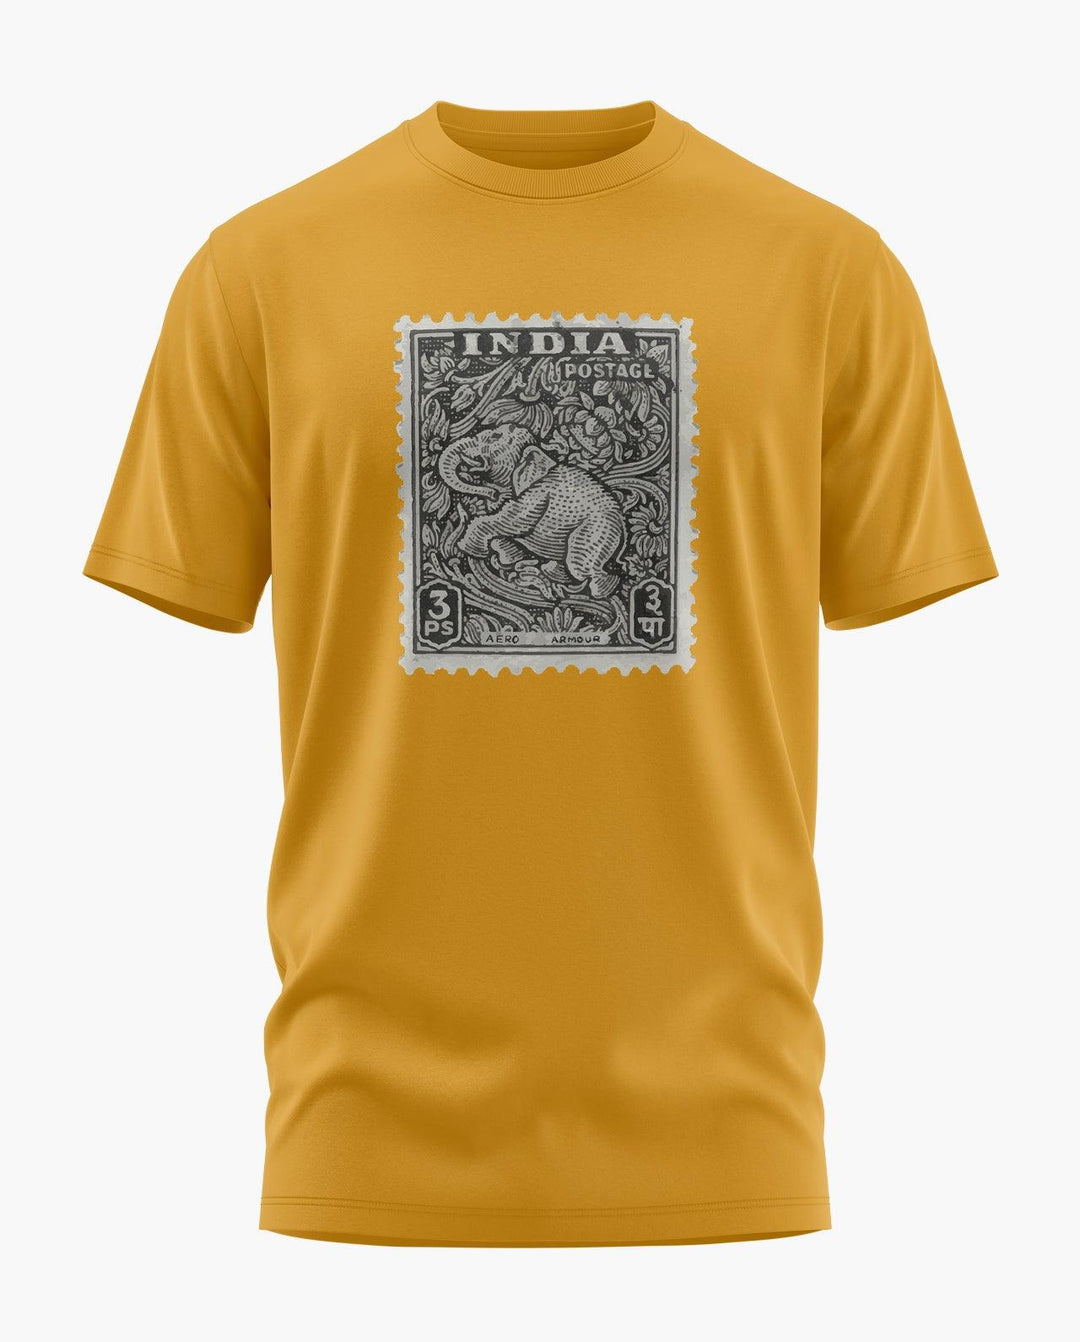 Elephant Postal Stamp T-Shirt - Aero Armour